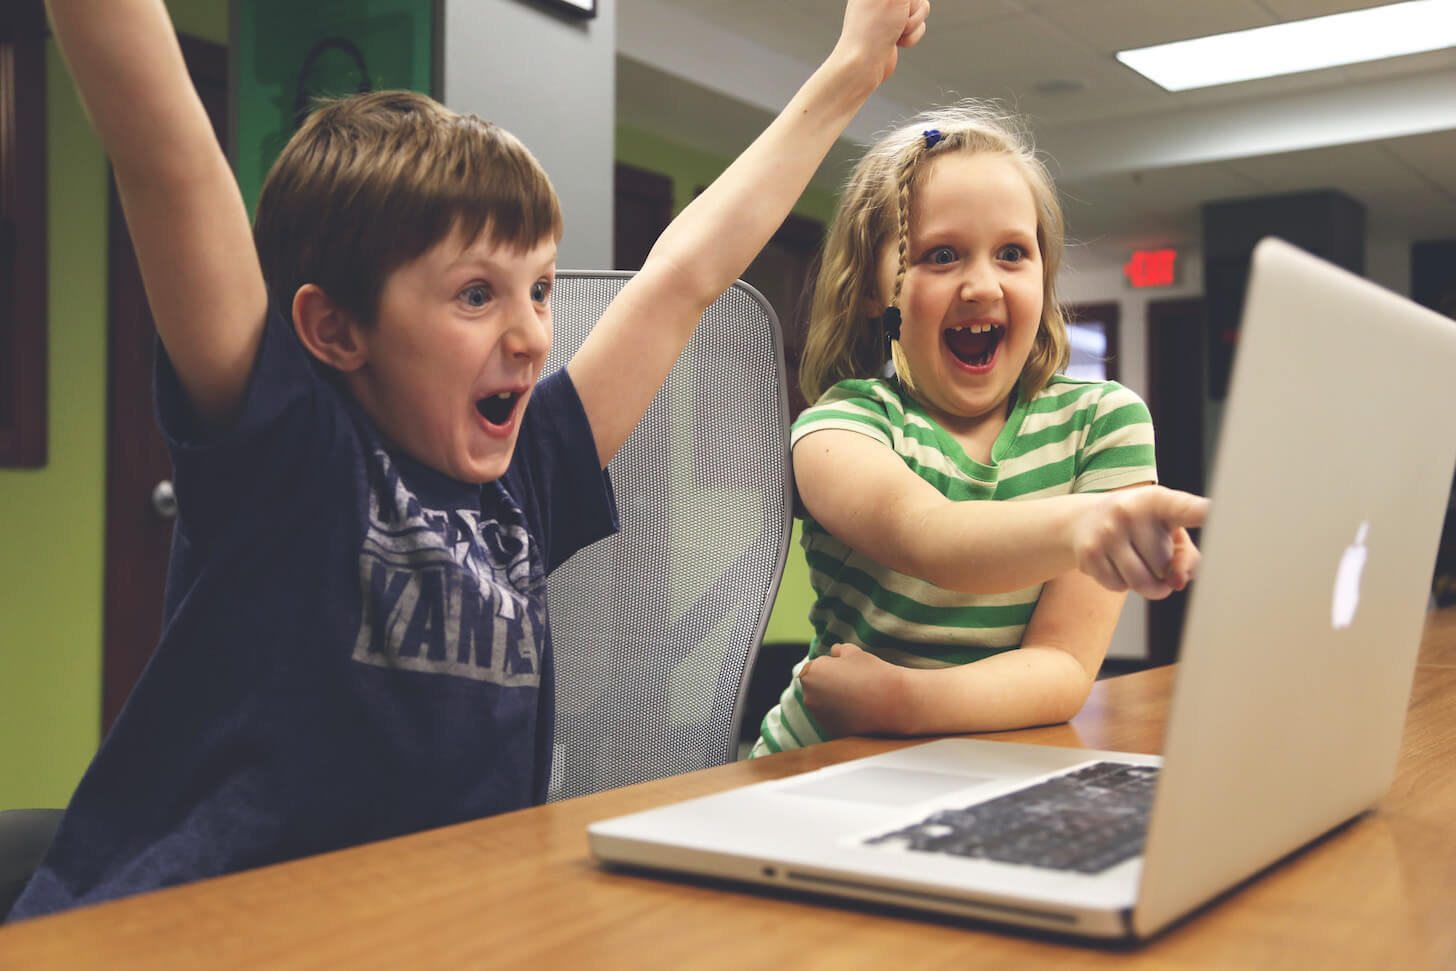 MacBookProを見て喜ぶ子供